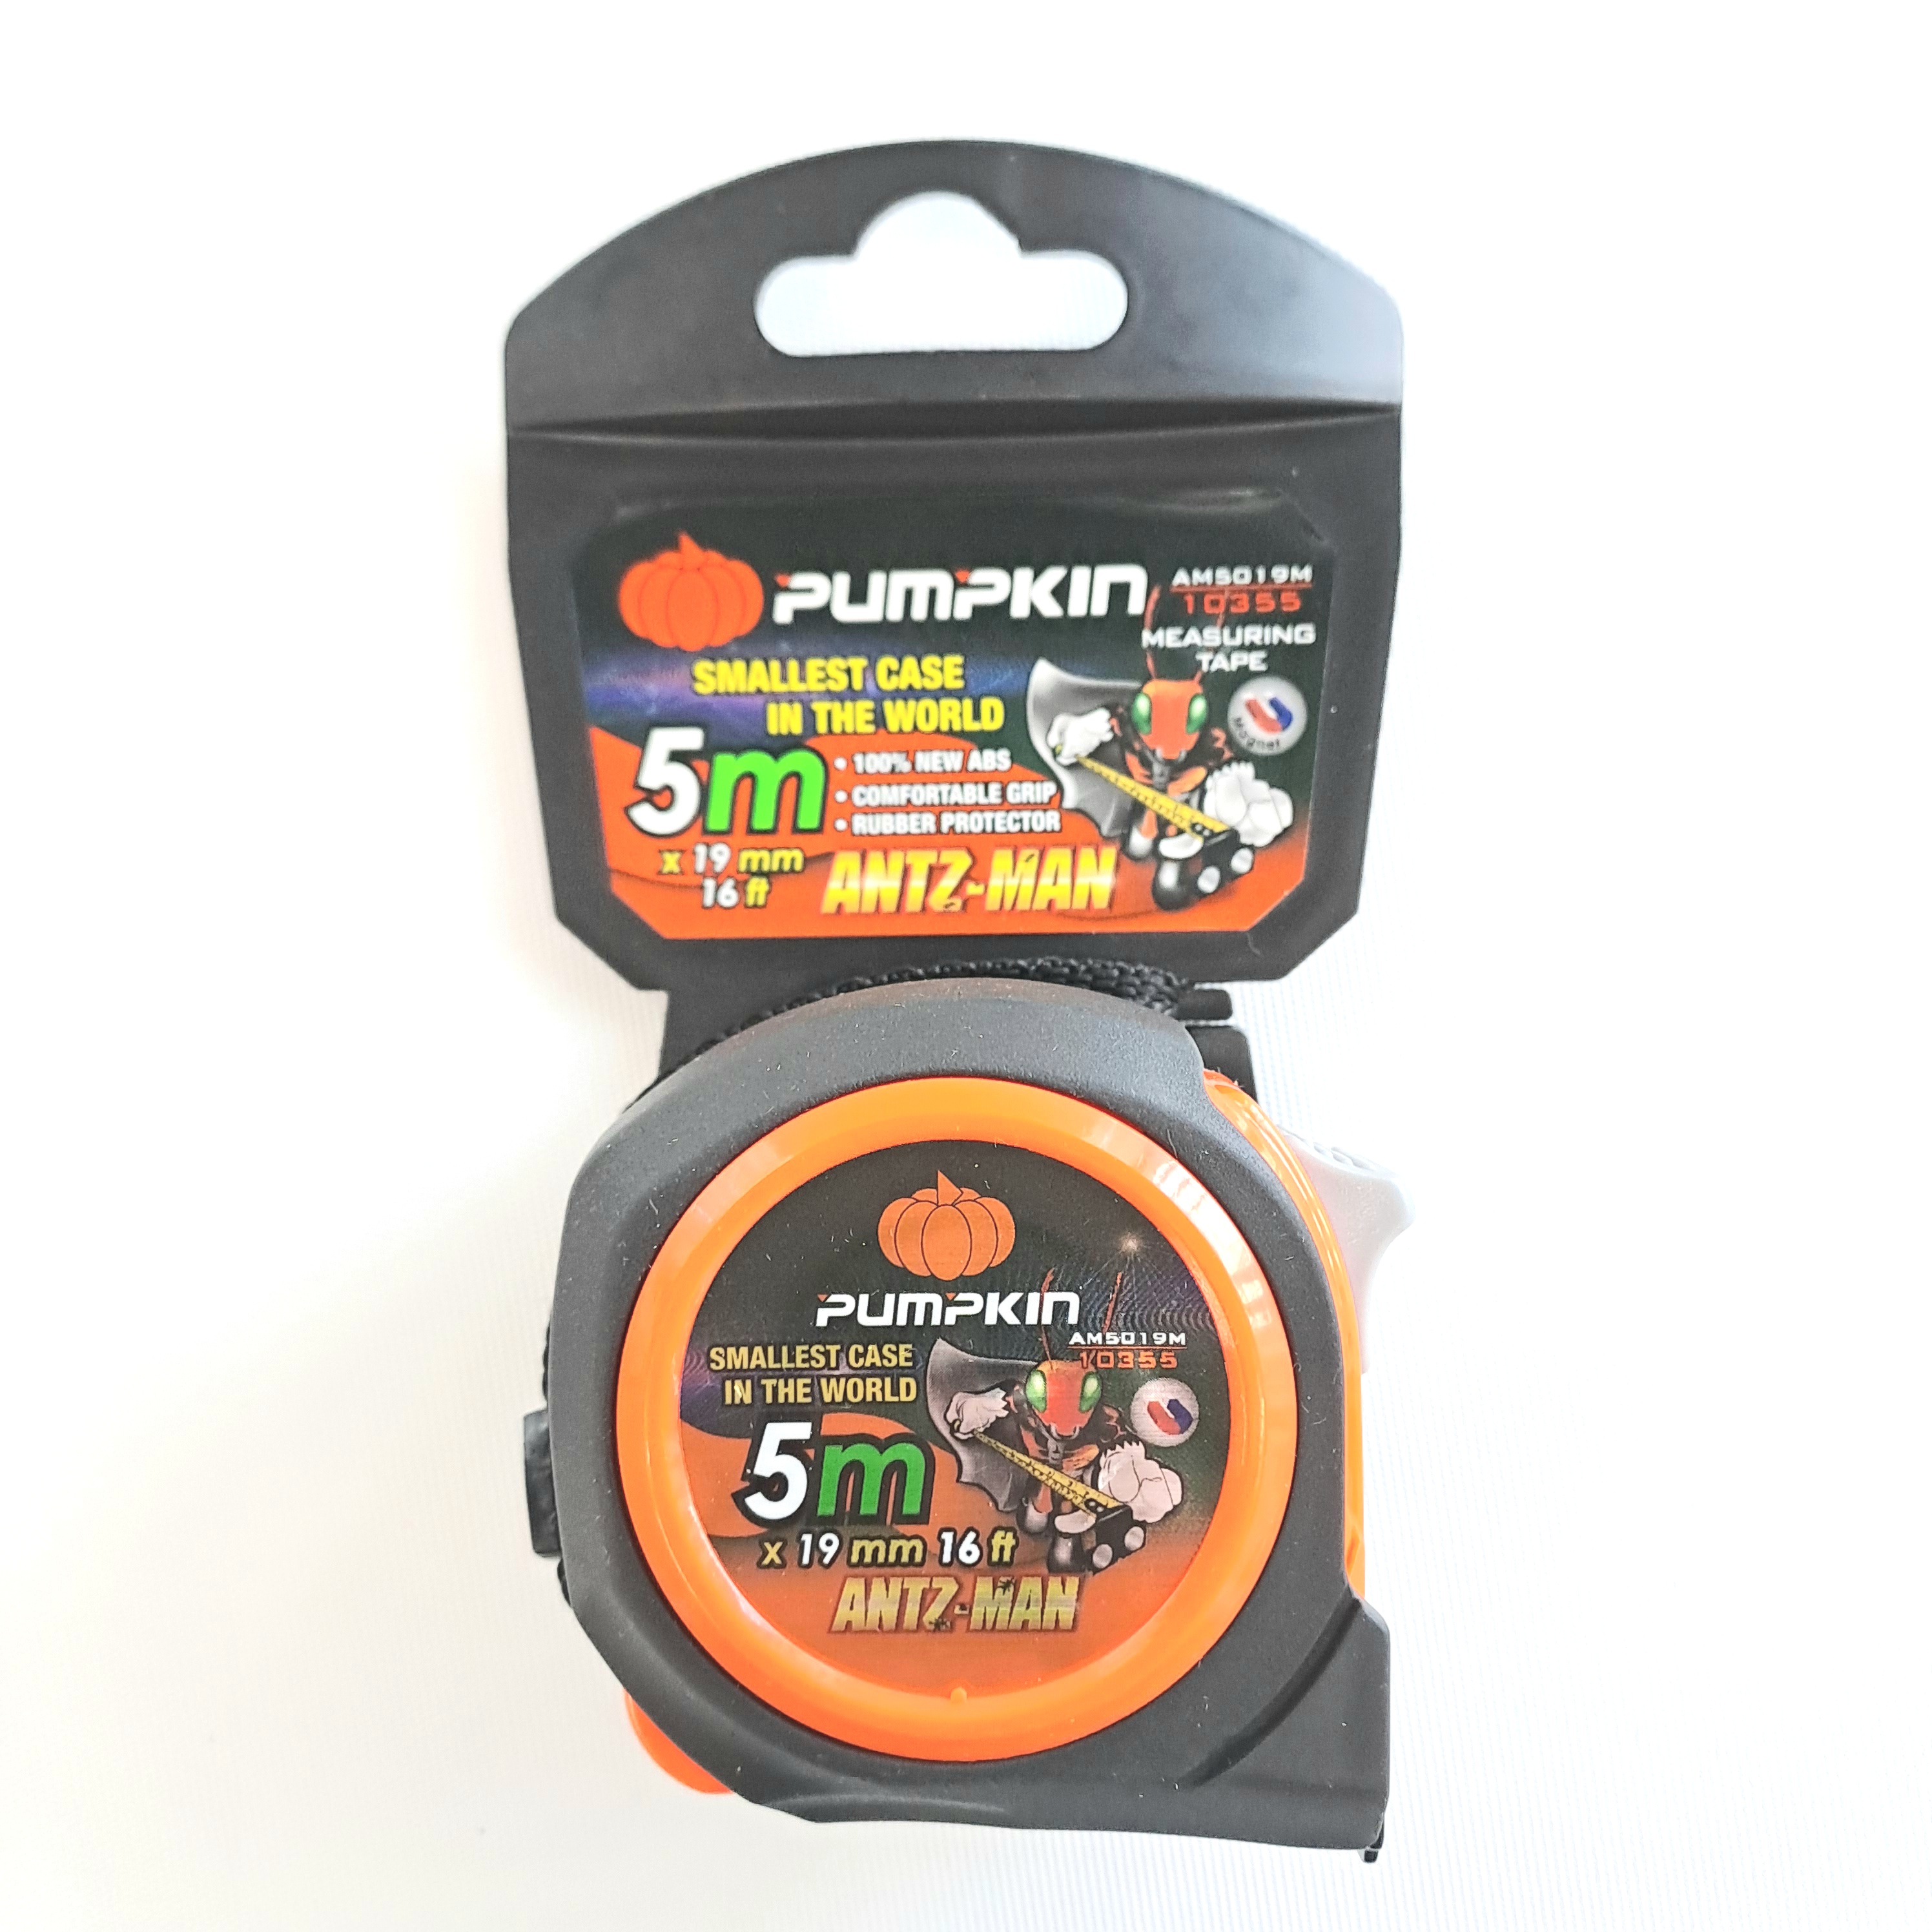 Pumpkin 10355 Antz-man Mag Measuring Tape 5m/16ft x19mm